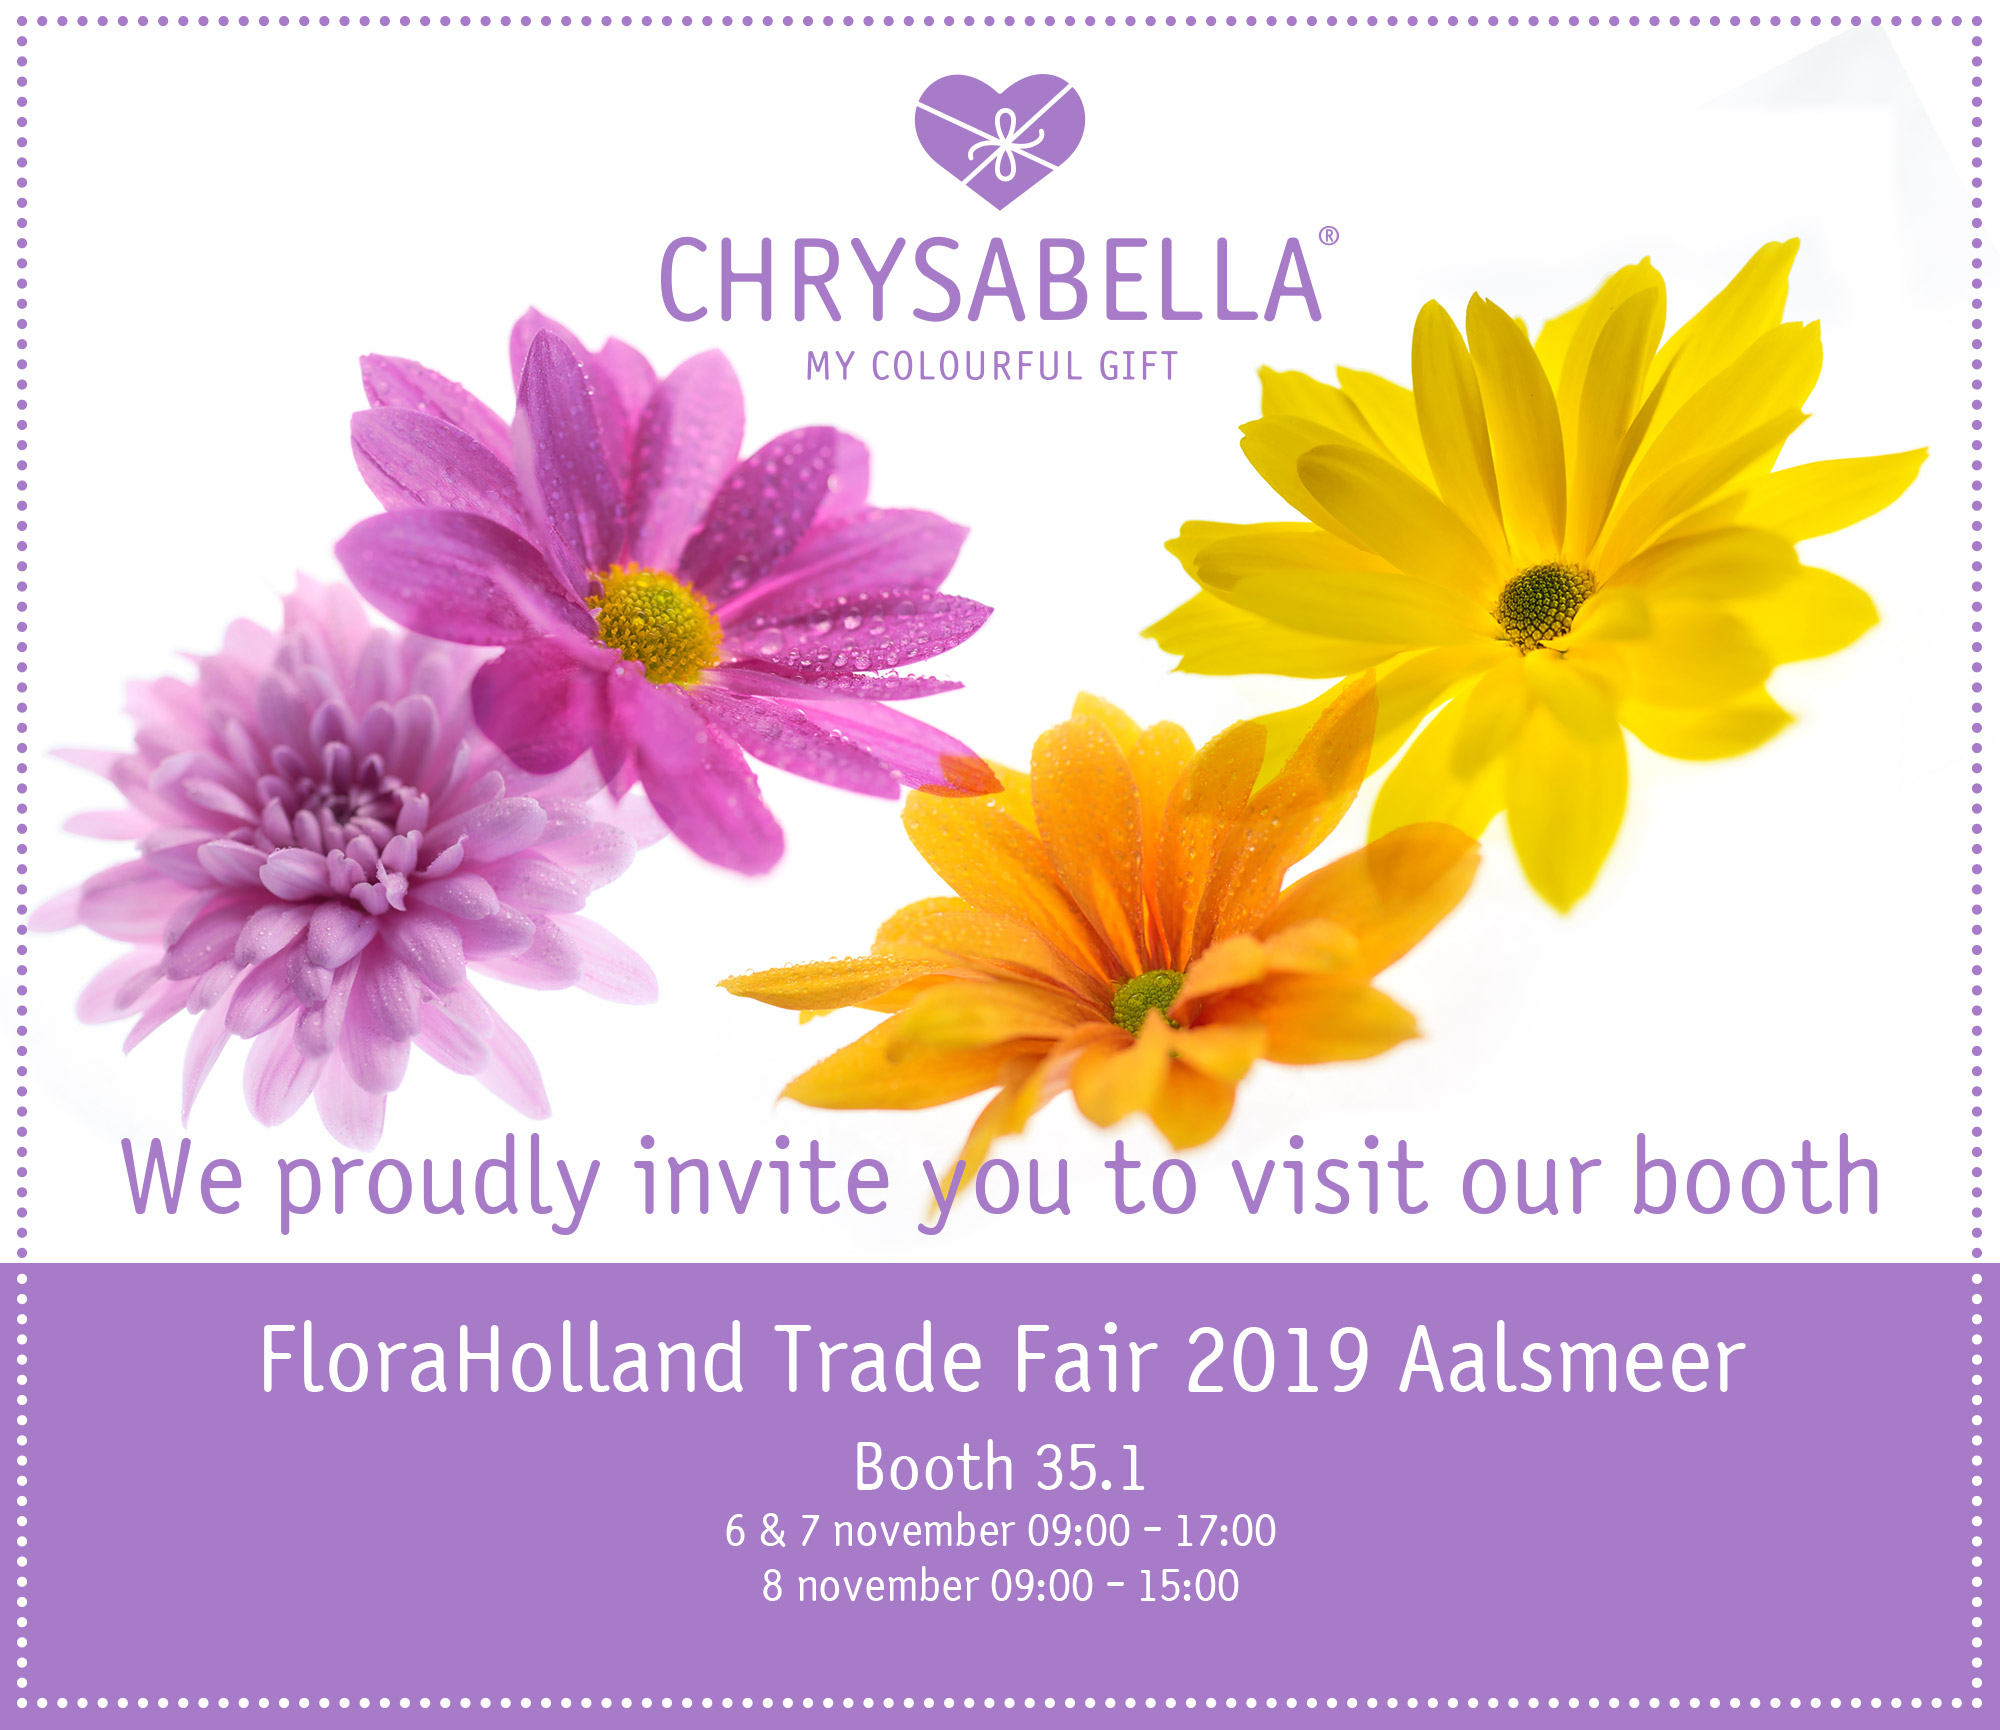 berkhout chrysabella FloraHolland Trade Fair 2019